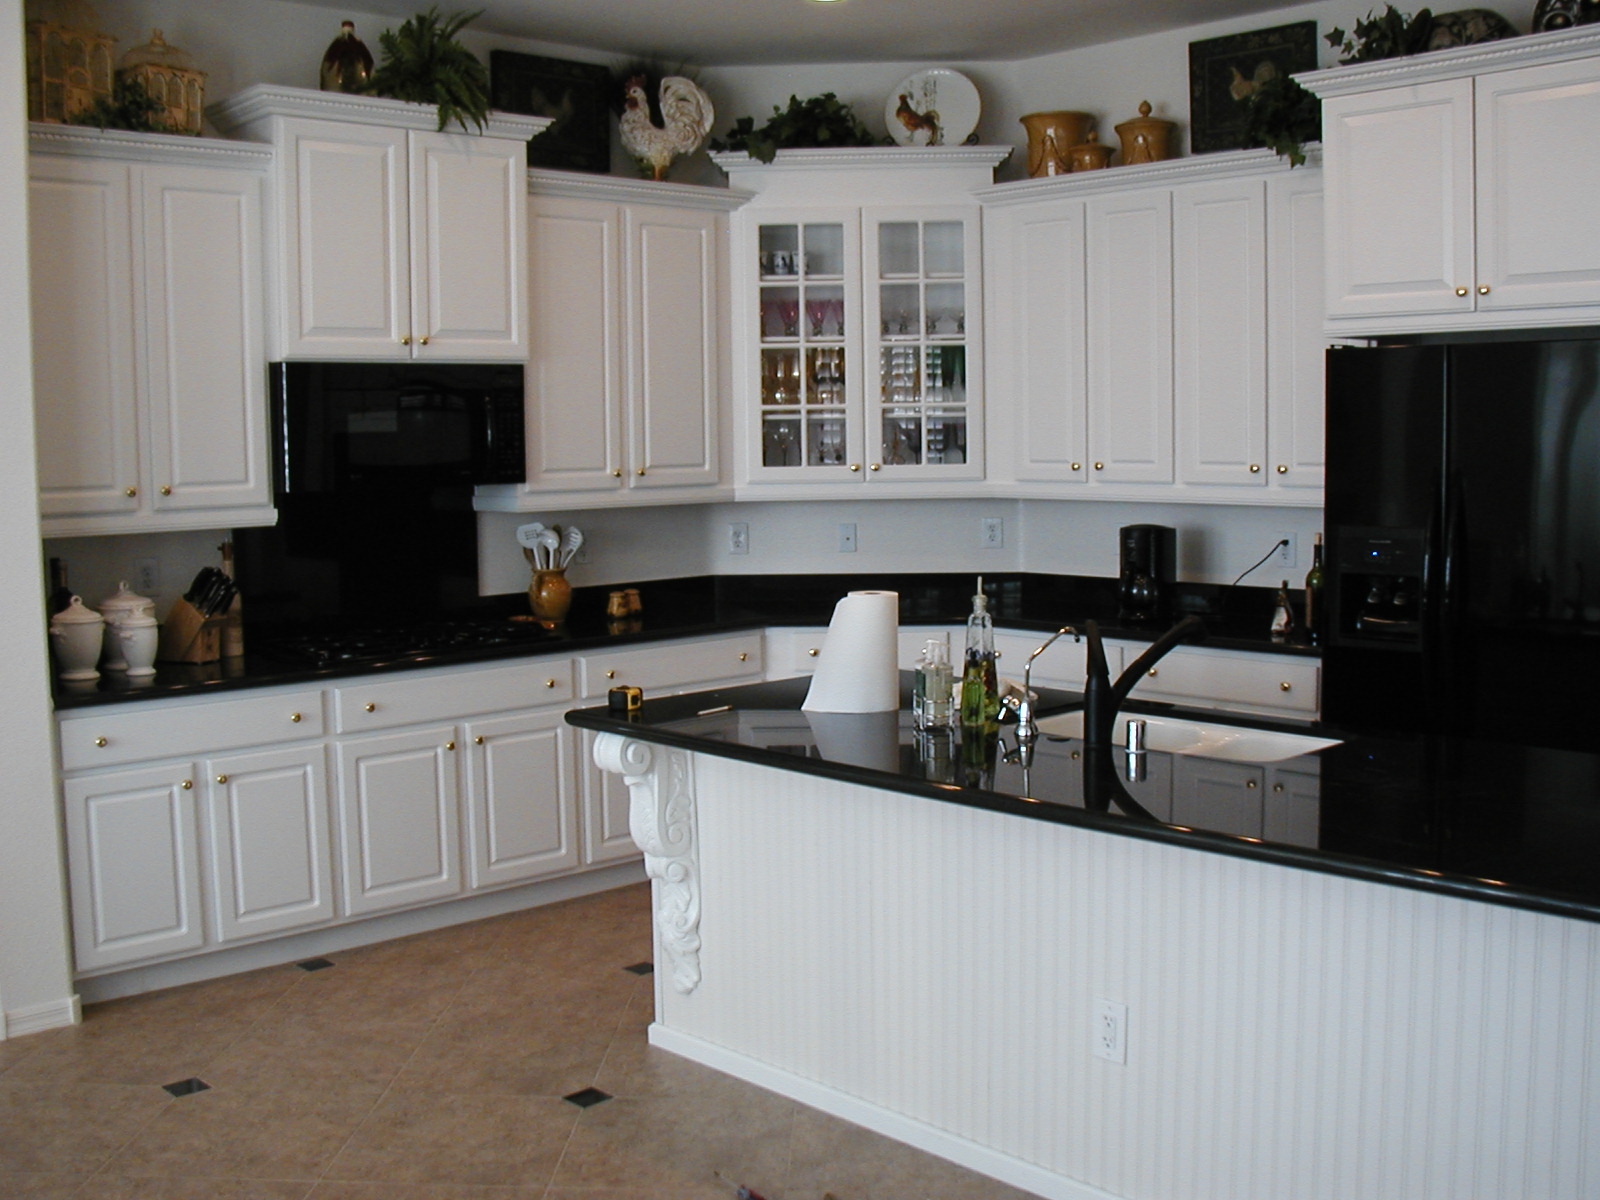 kitchen white cabinets black appliances photo - 6